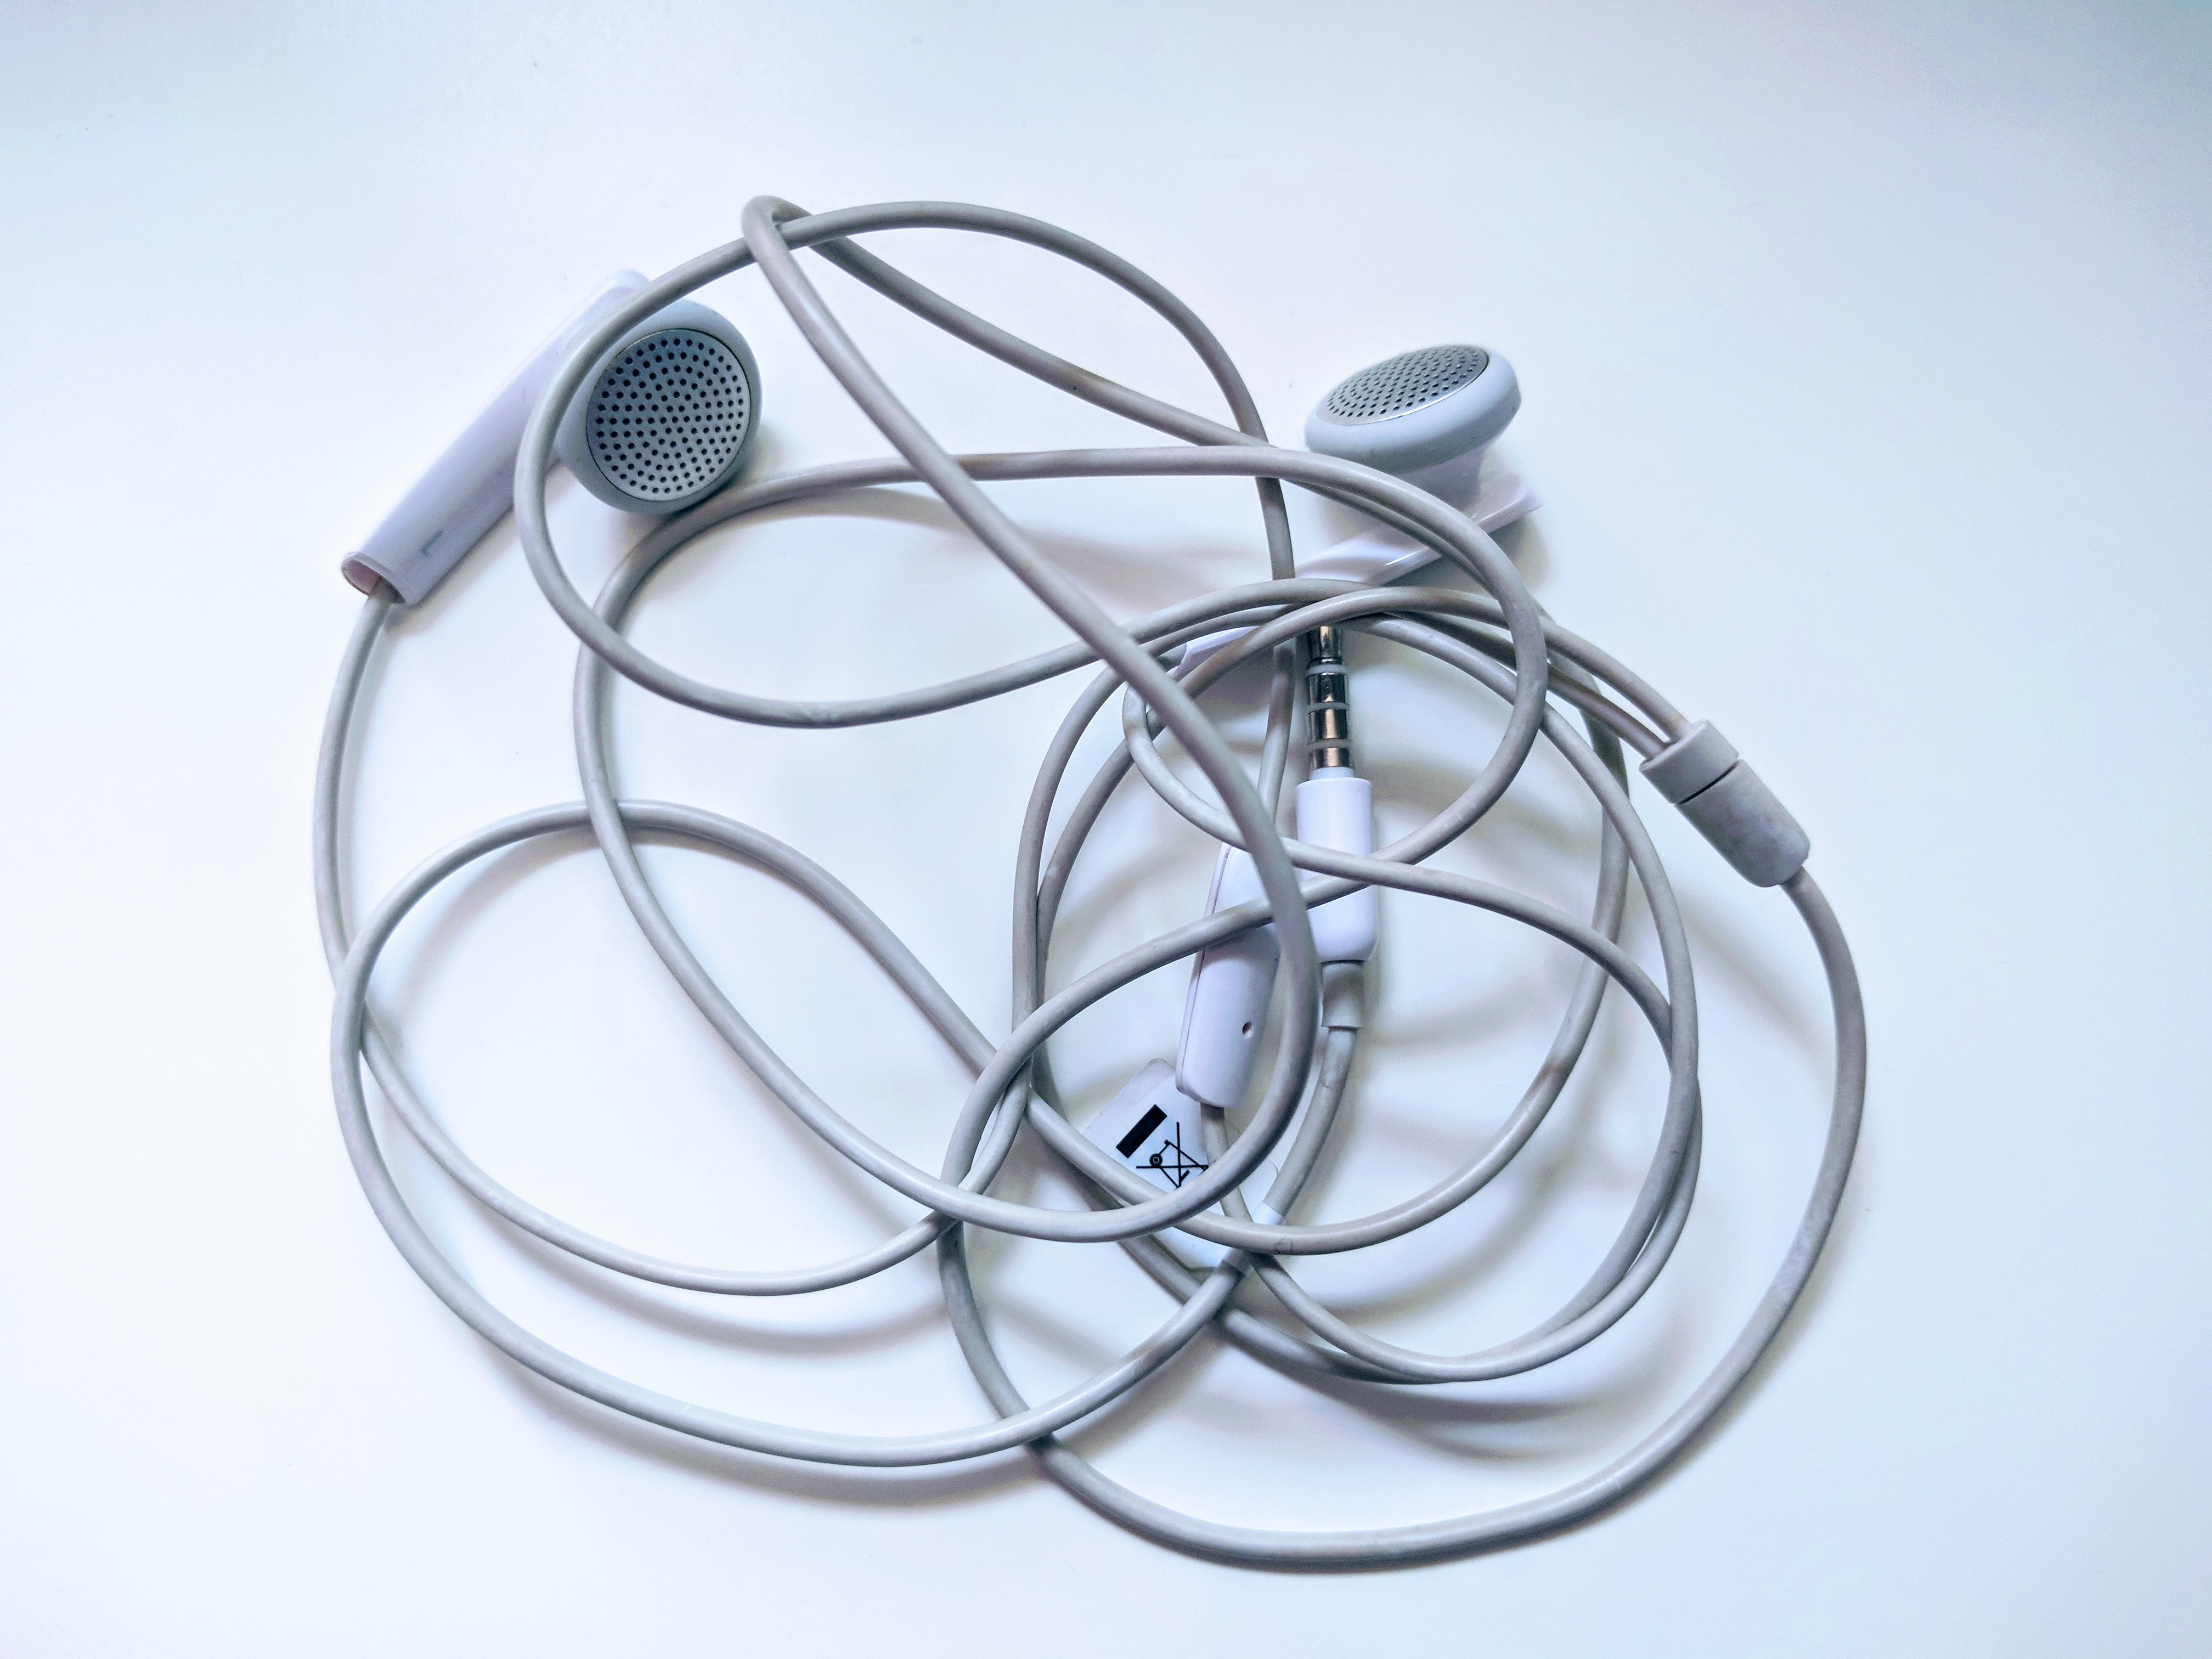 Tangled Headphones gadgetstate.tech